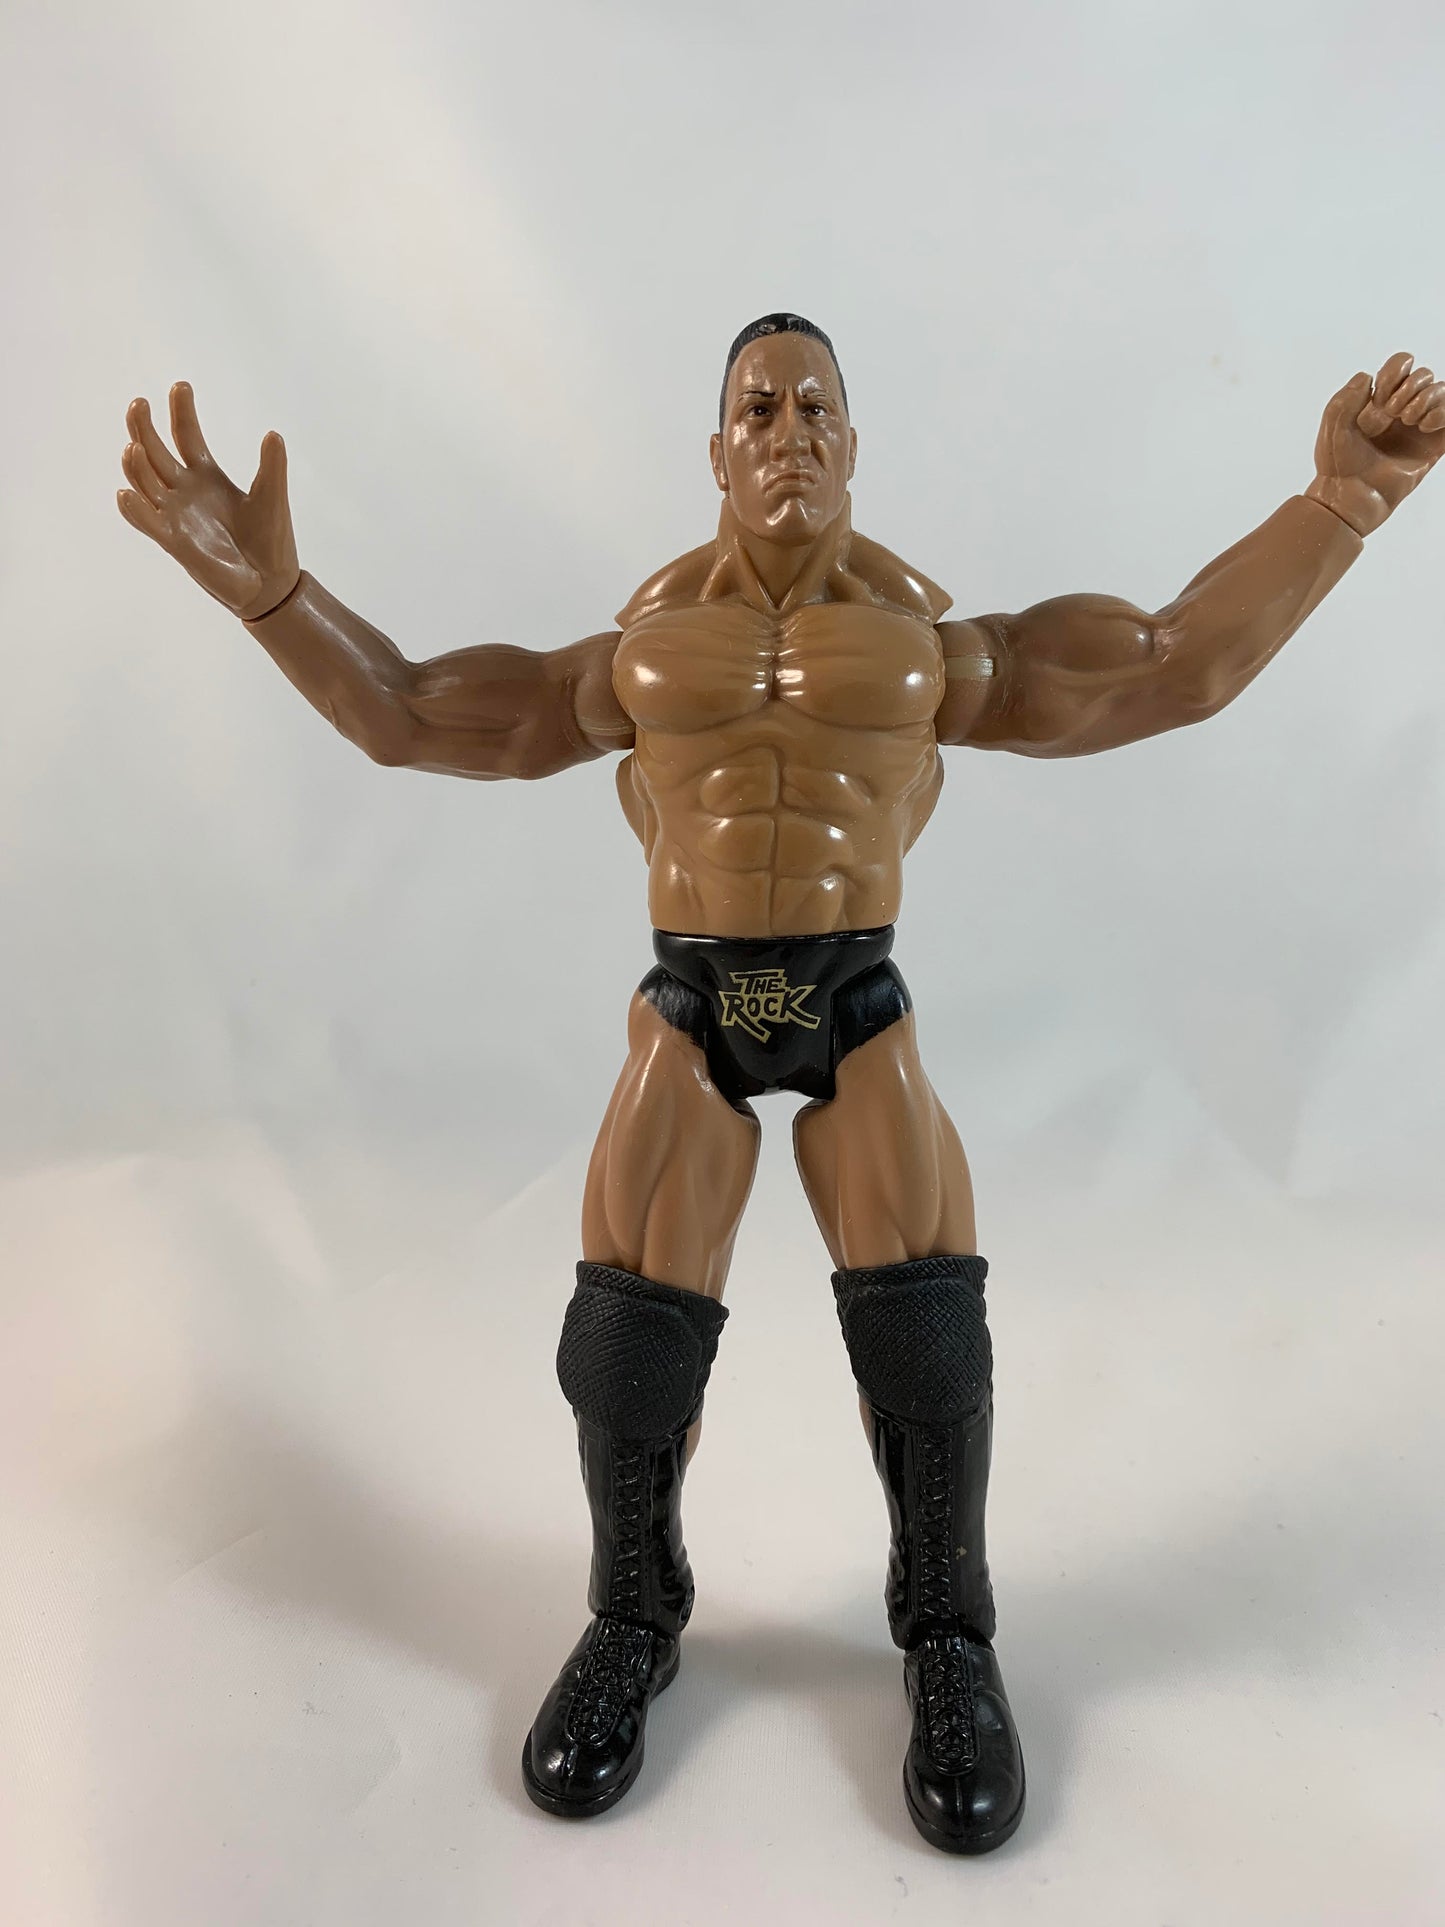 1999 Jakks Pacific Titon Tron WWE The Rock - Loose Action Figure